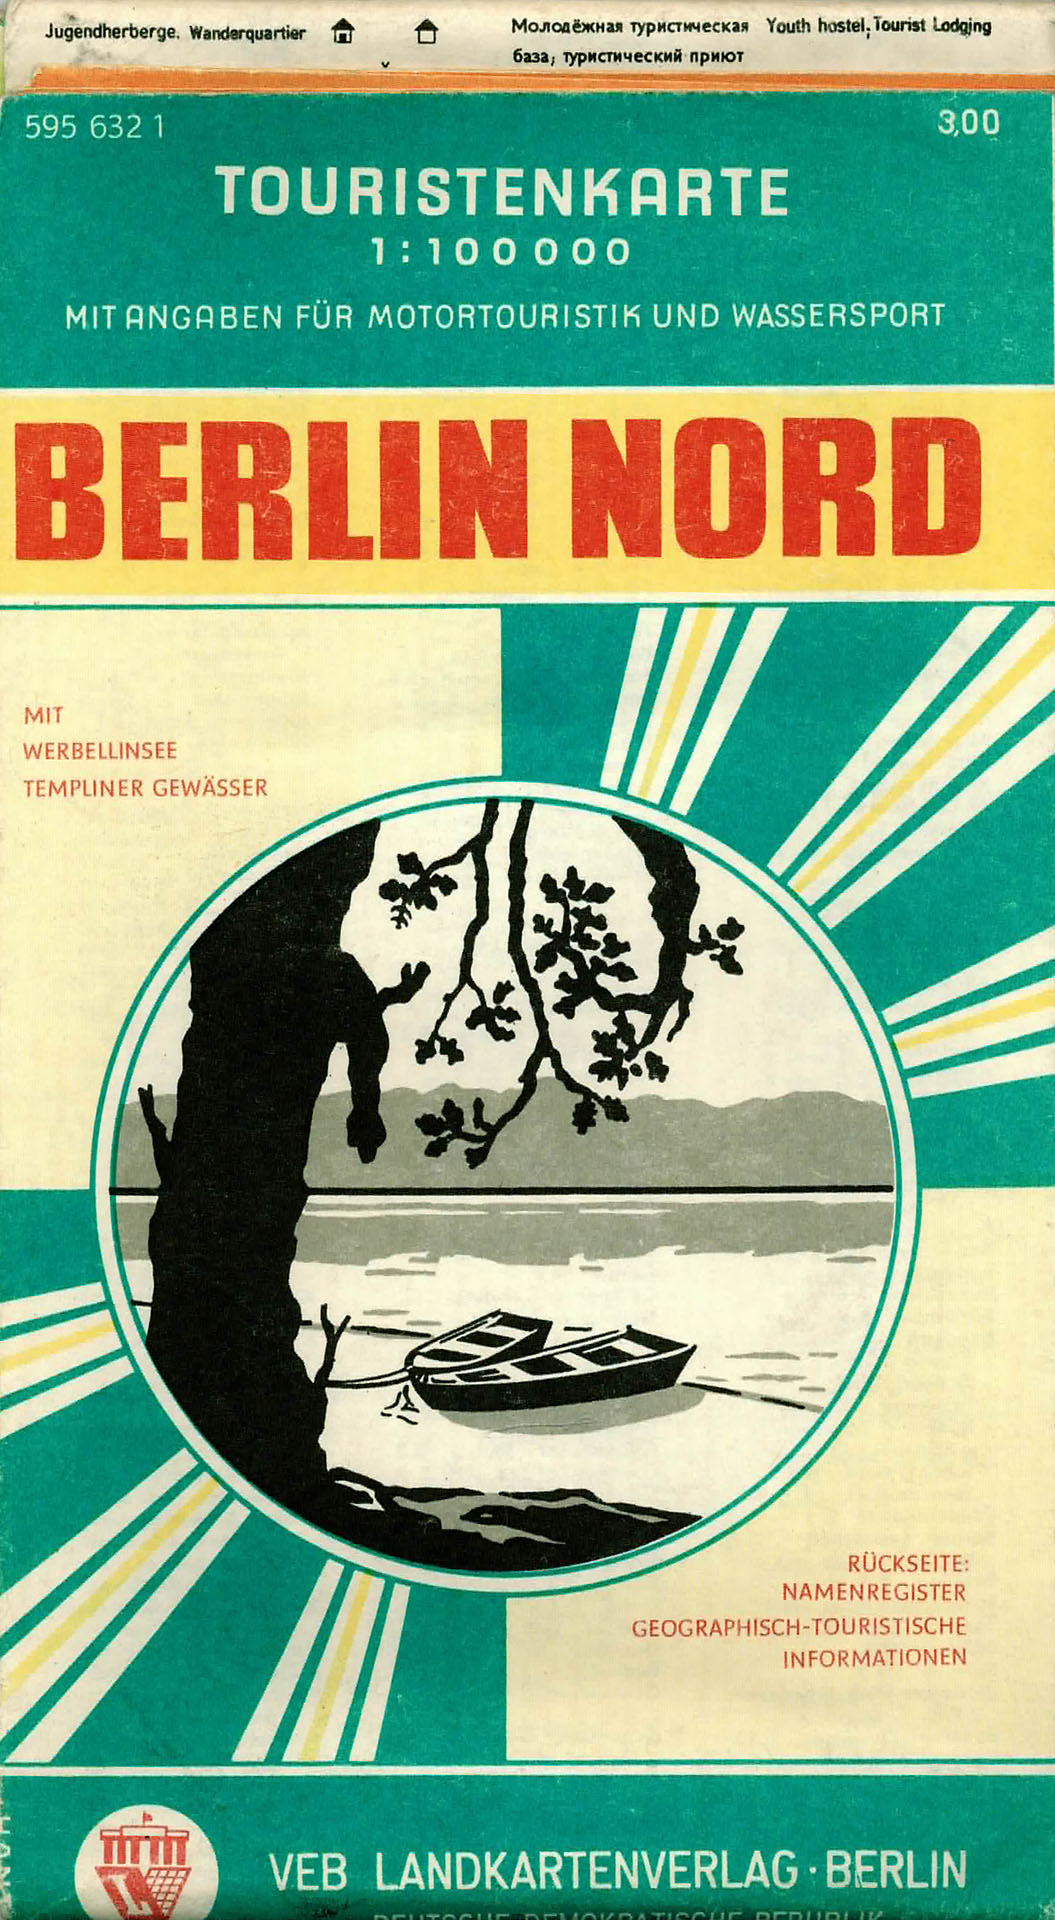 Touristenkarte Berlin Nord